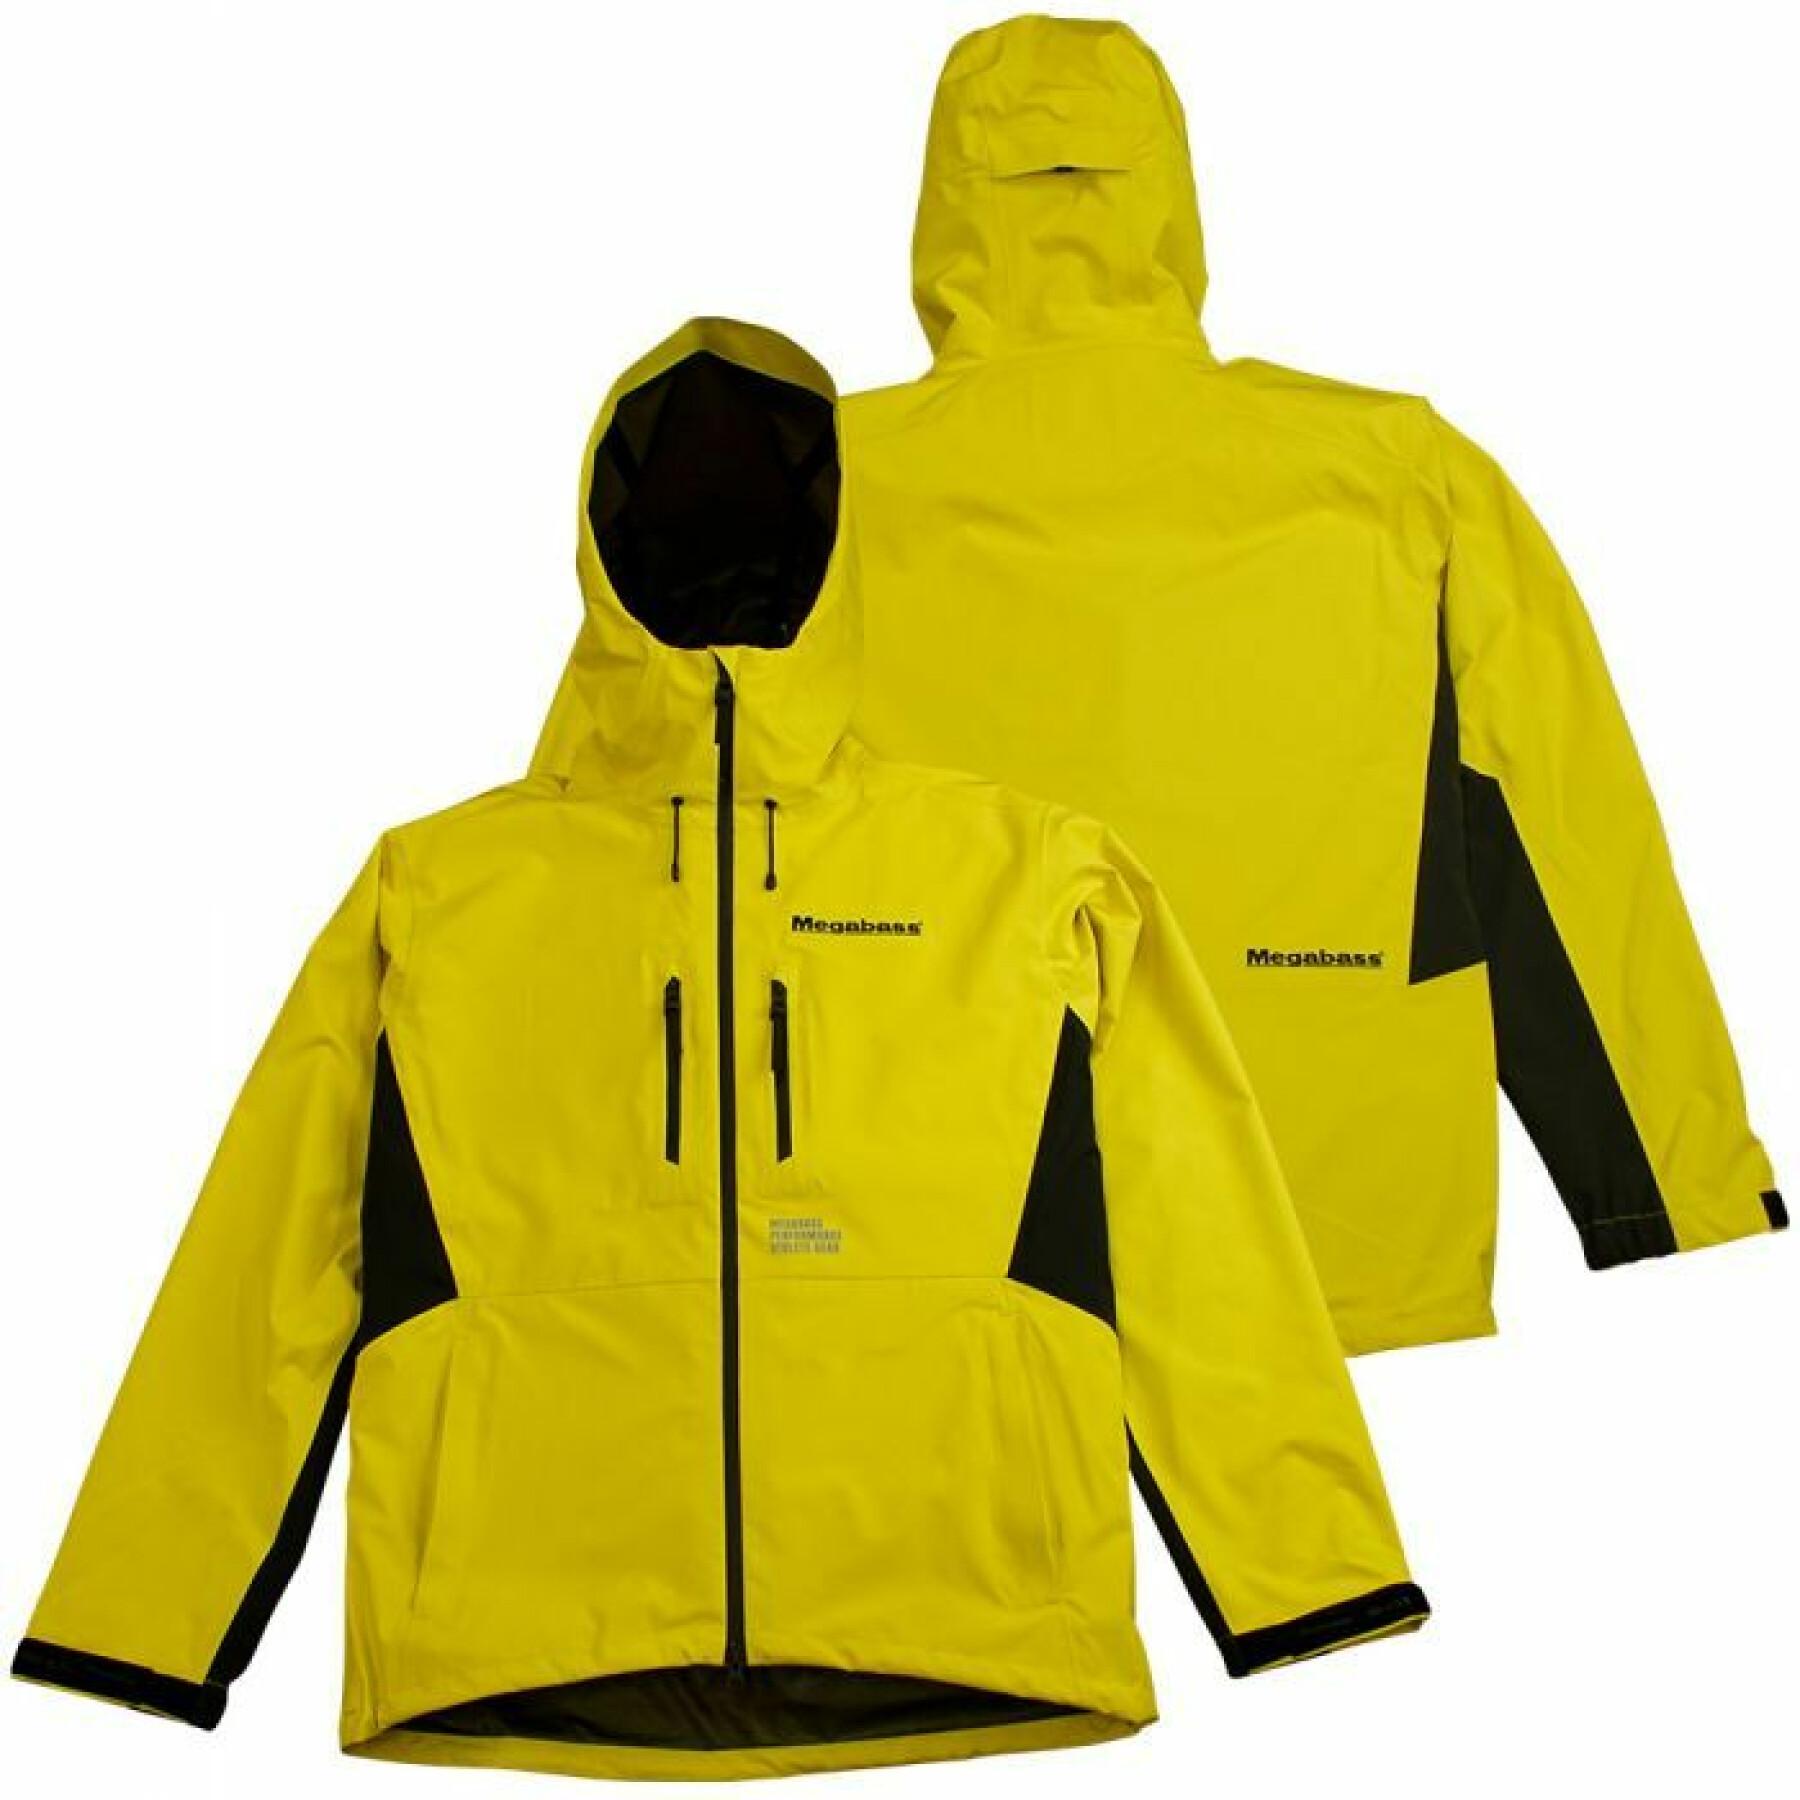 Waterproof jacket Megabass Wilderness Competition